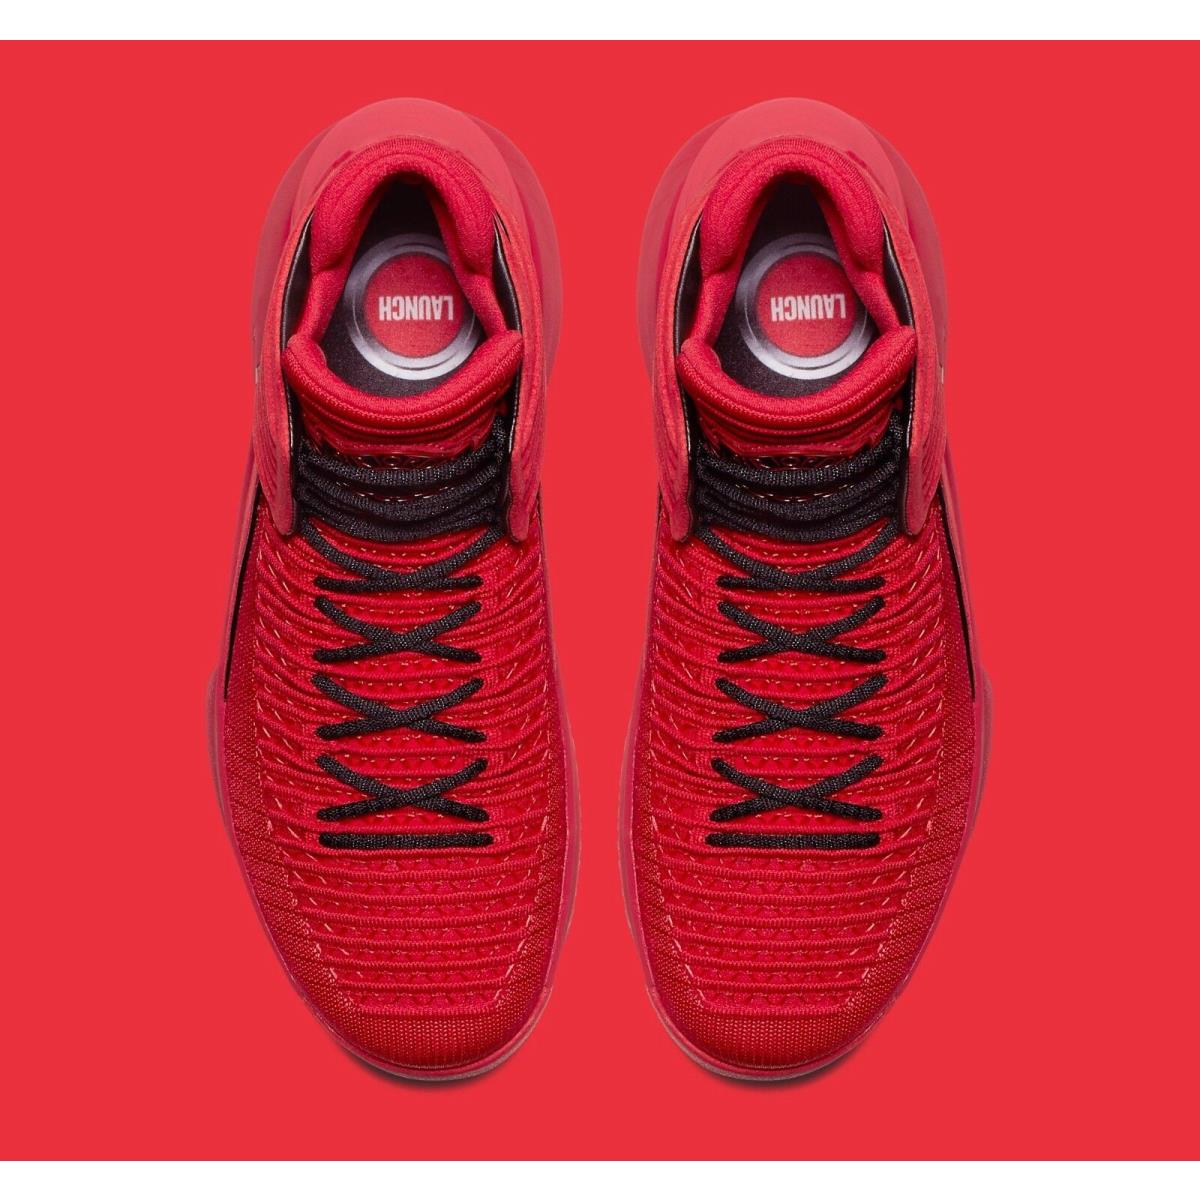 Malversar Berenjena Genuino Nike Air Jordan 32 Xxxii Rosso Corsa Gym Red Size 14. AA1253-601 Banned  Bred | 883212141088 - Nike shoes - Red | SporTipTop